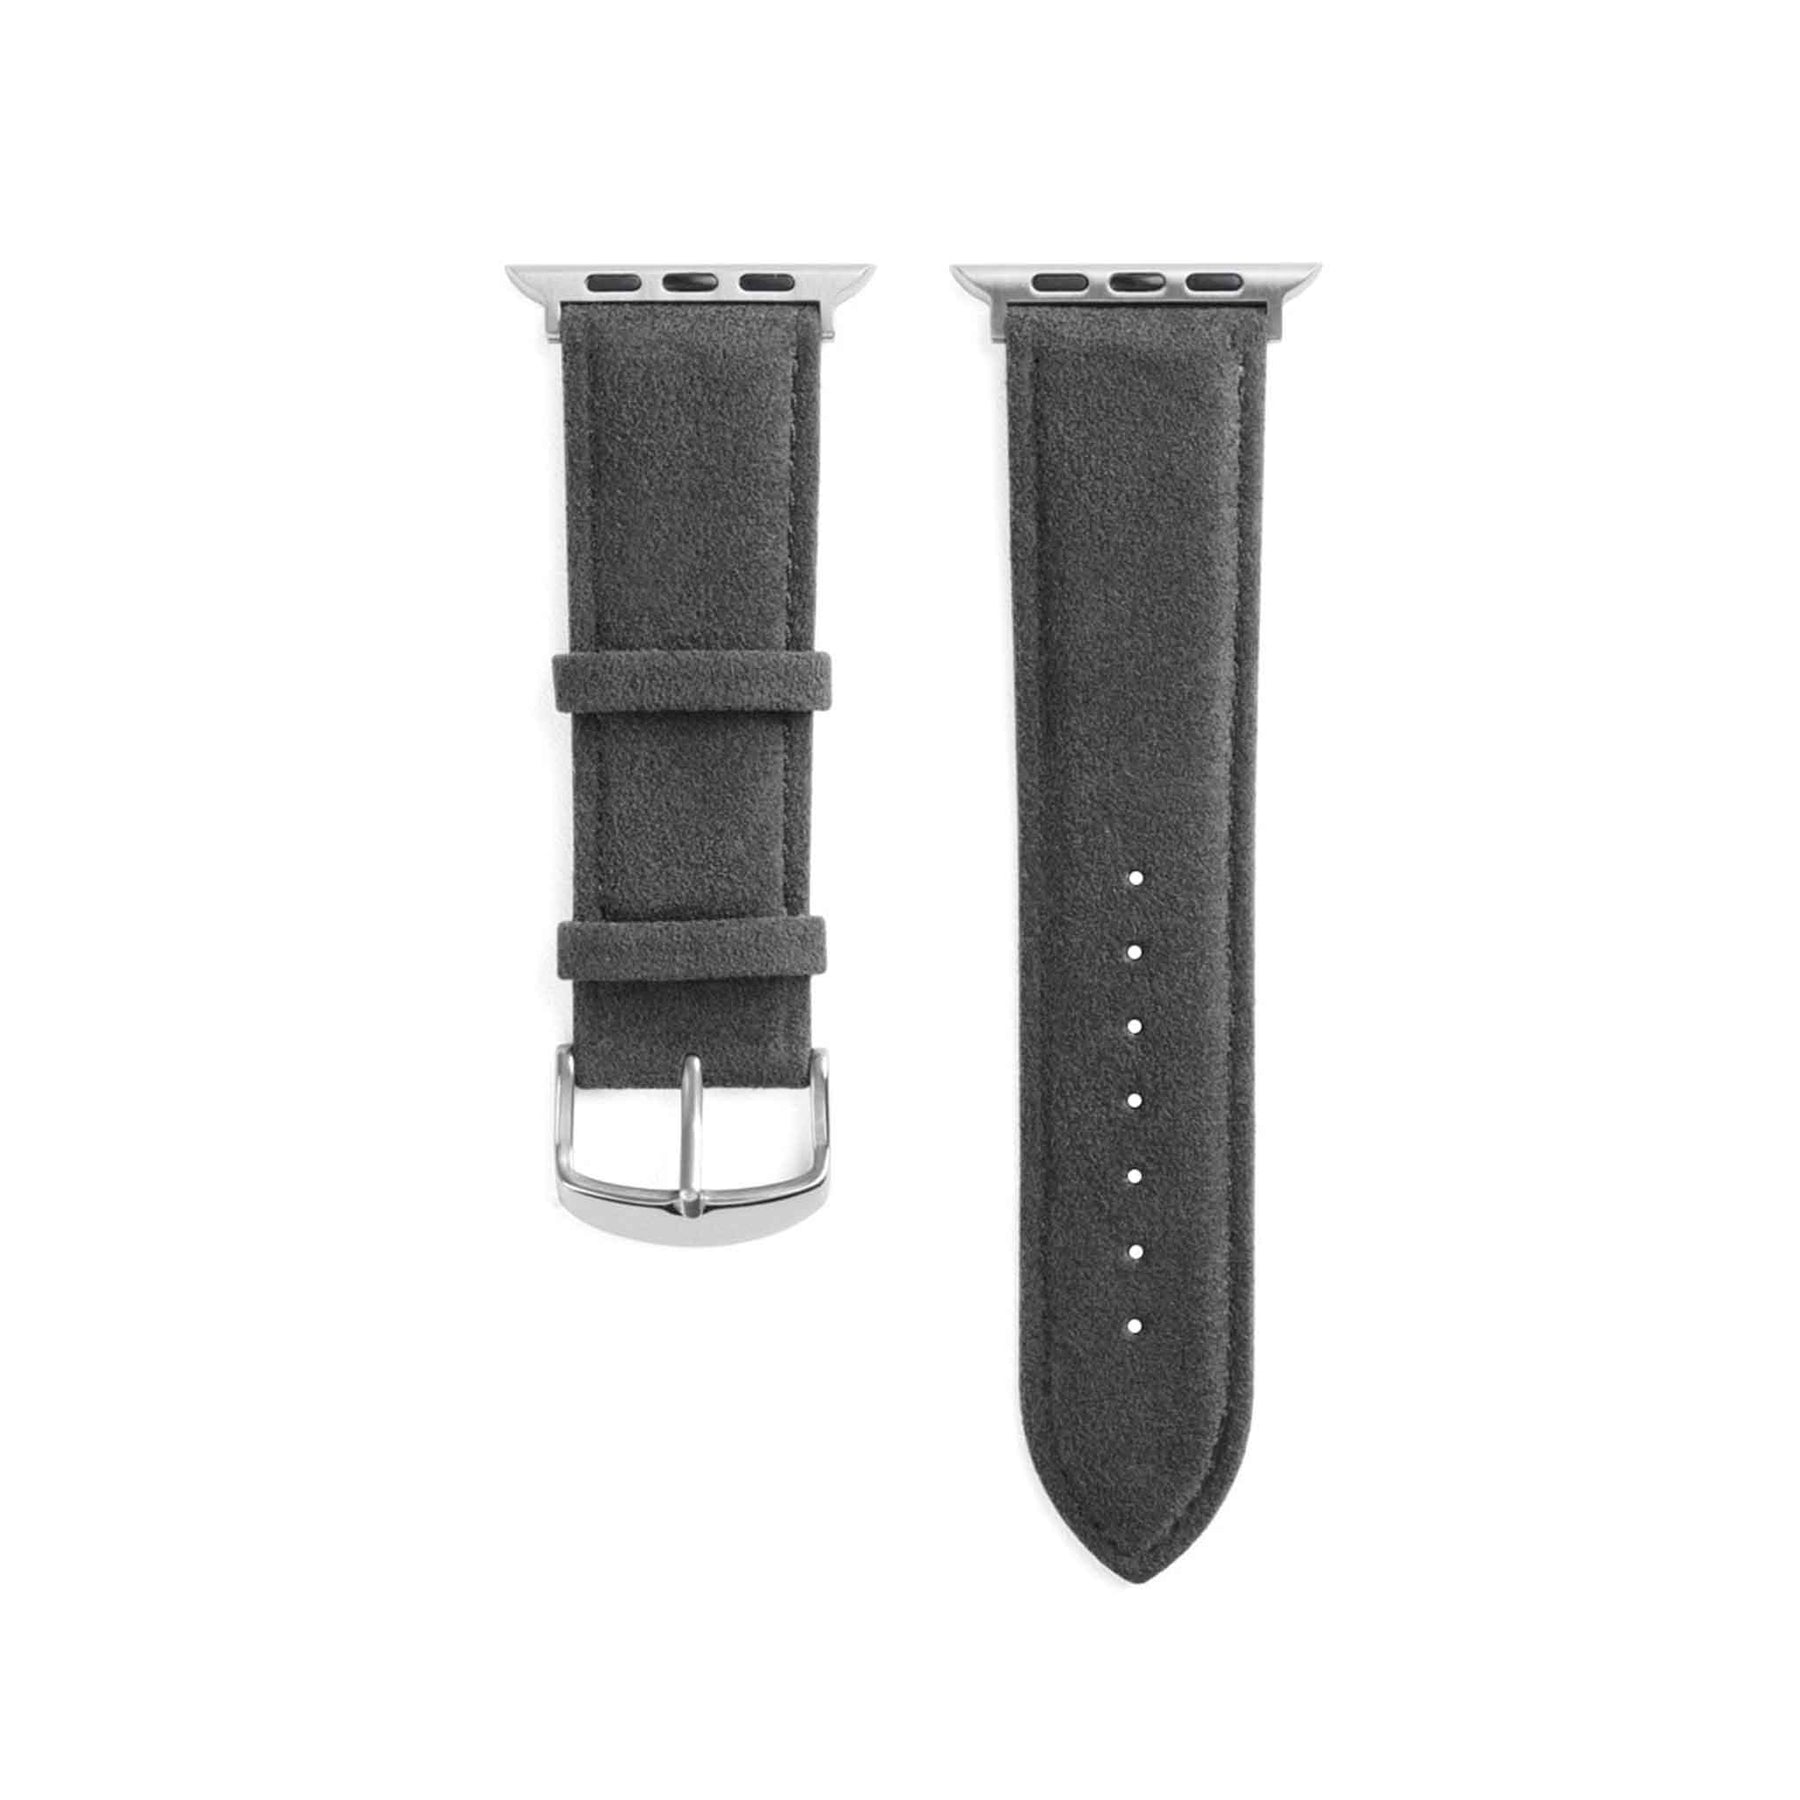 Apple Watch - Alcantara Wristband